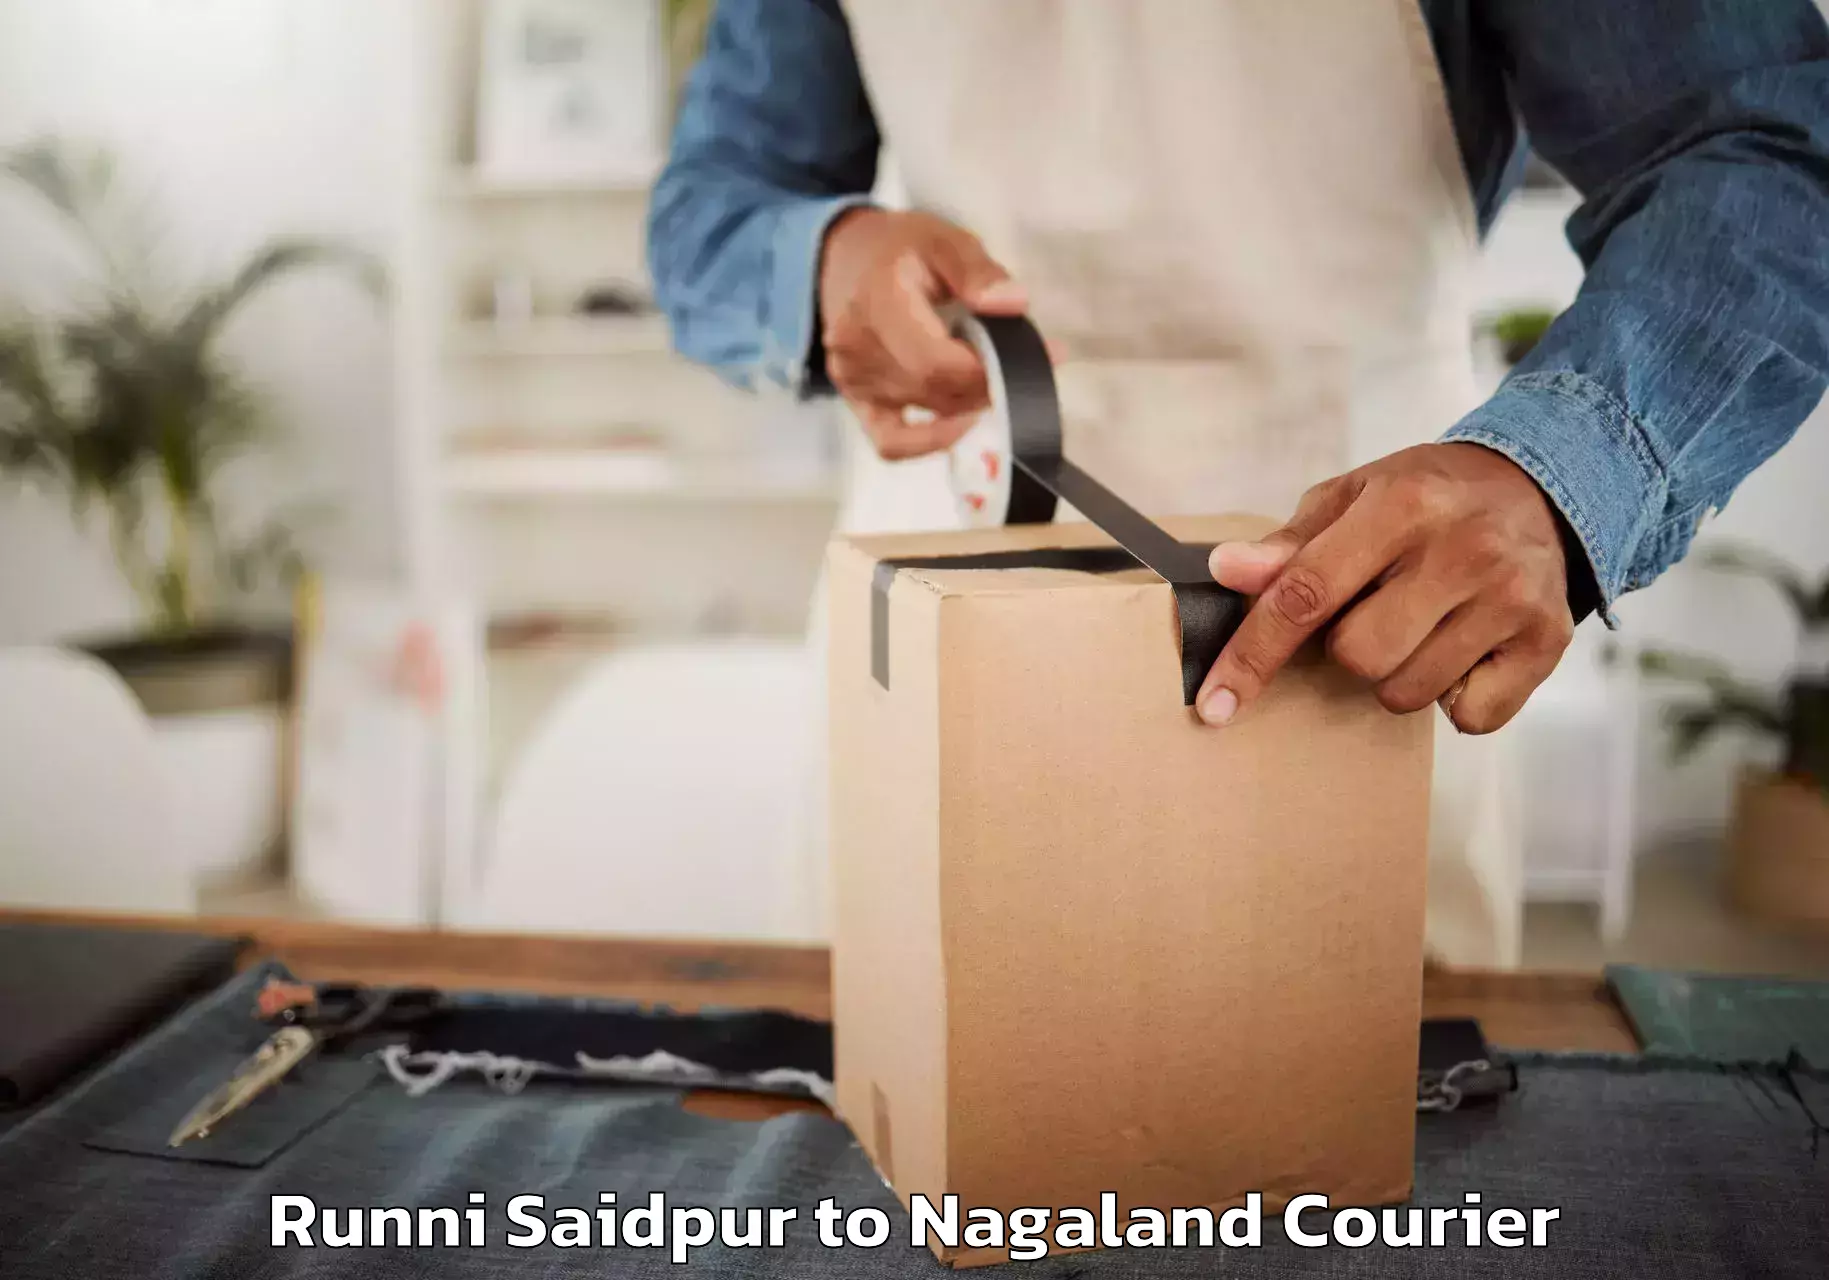 Trusted moving company Runni Saidpur to Mon